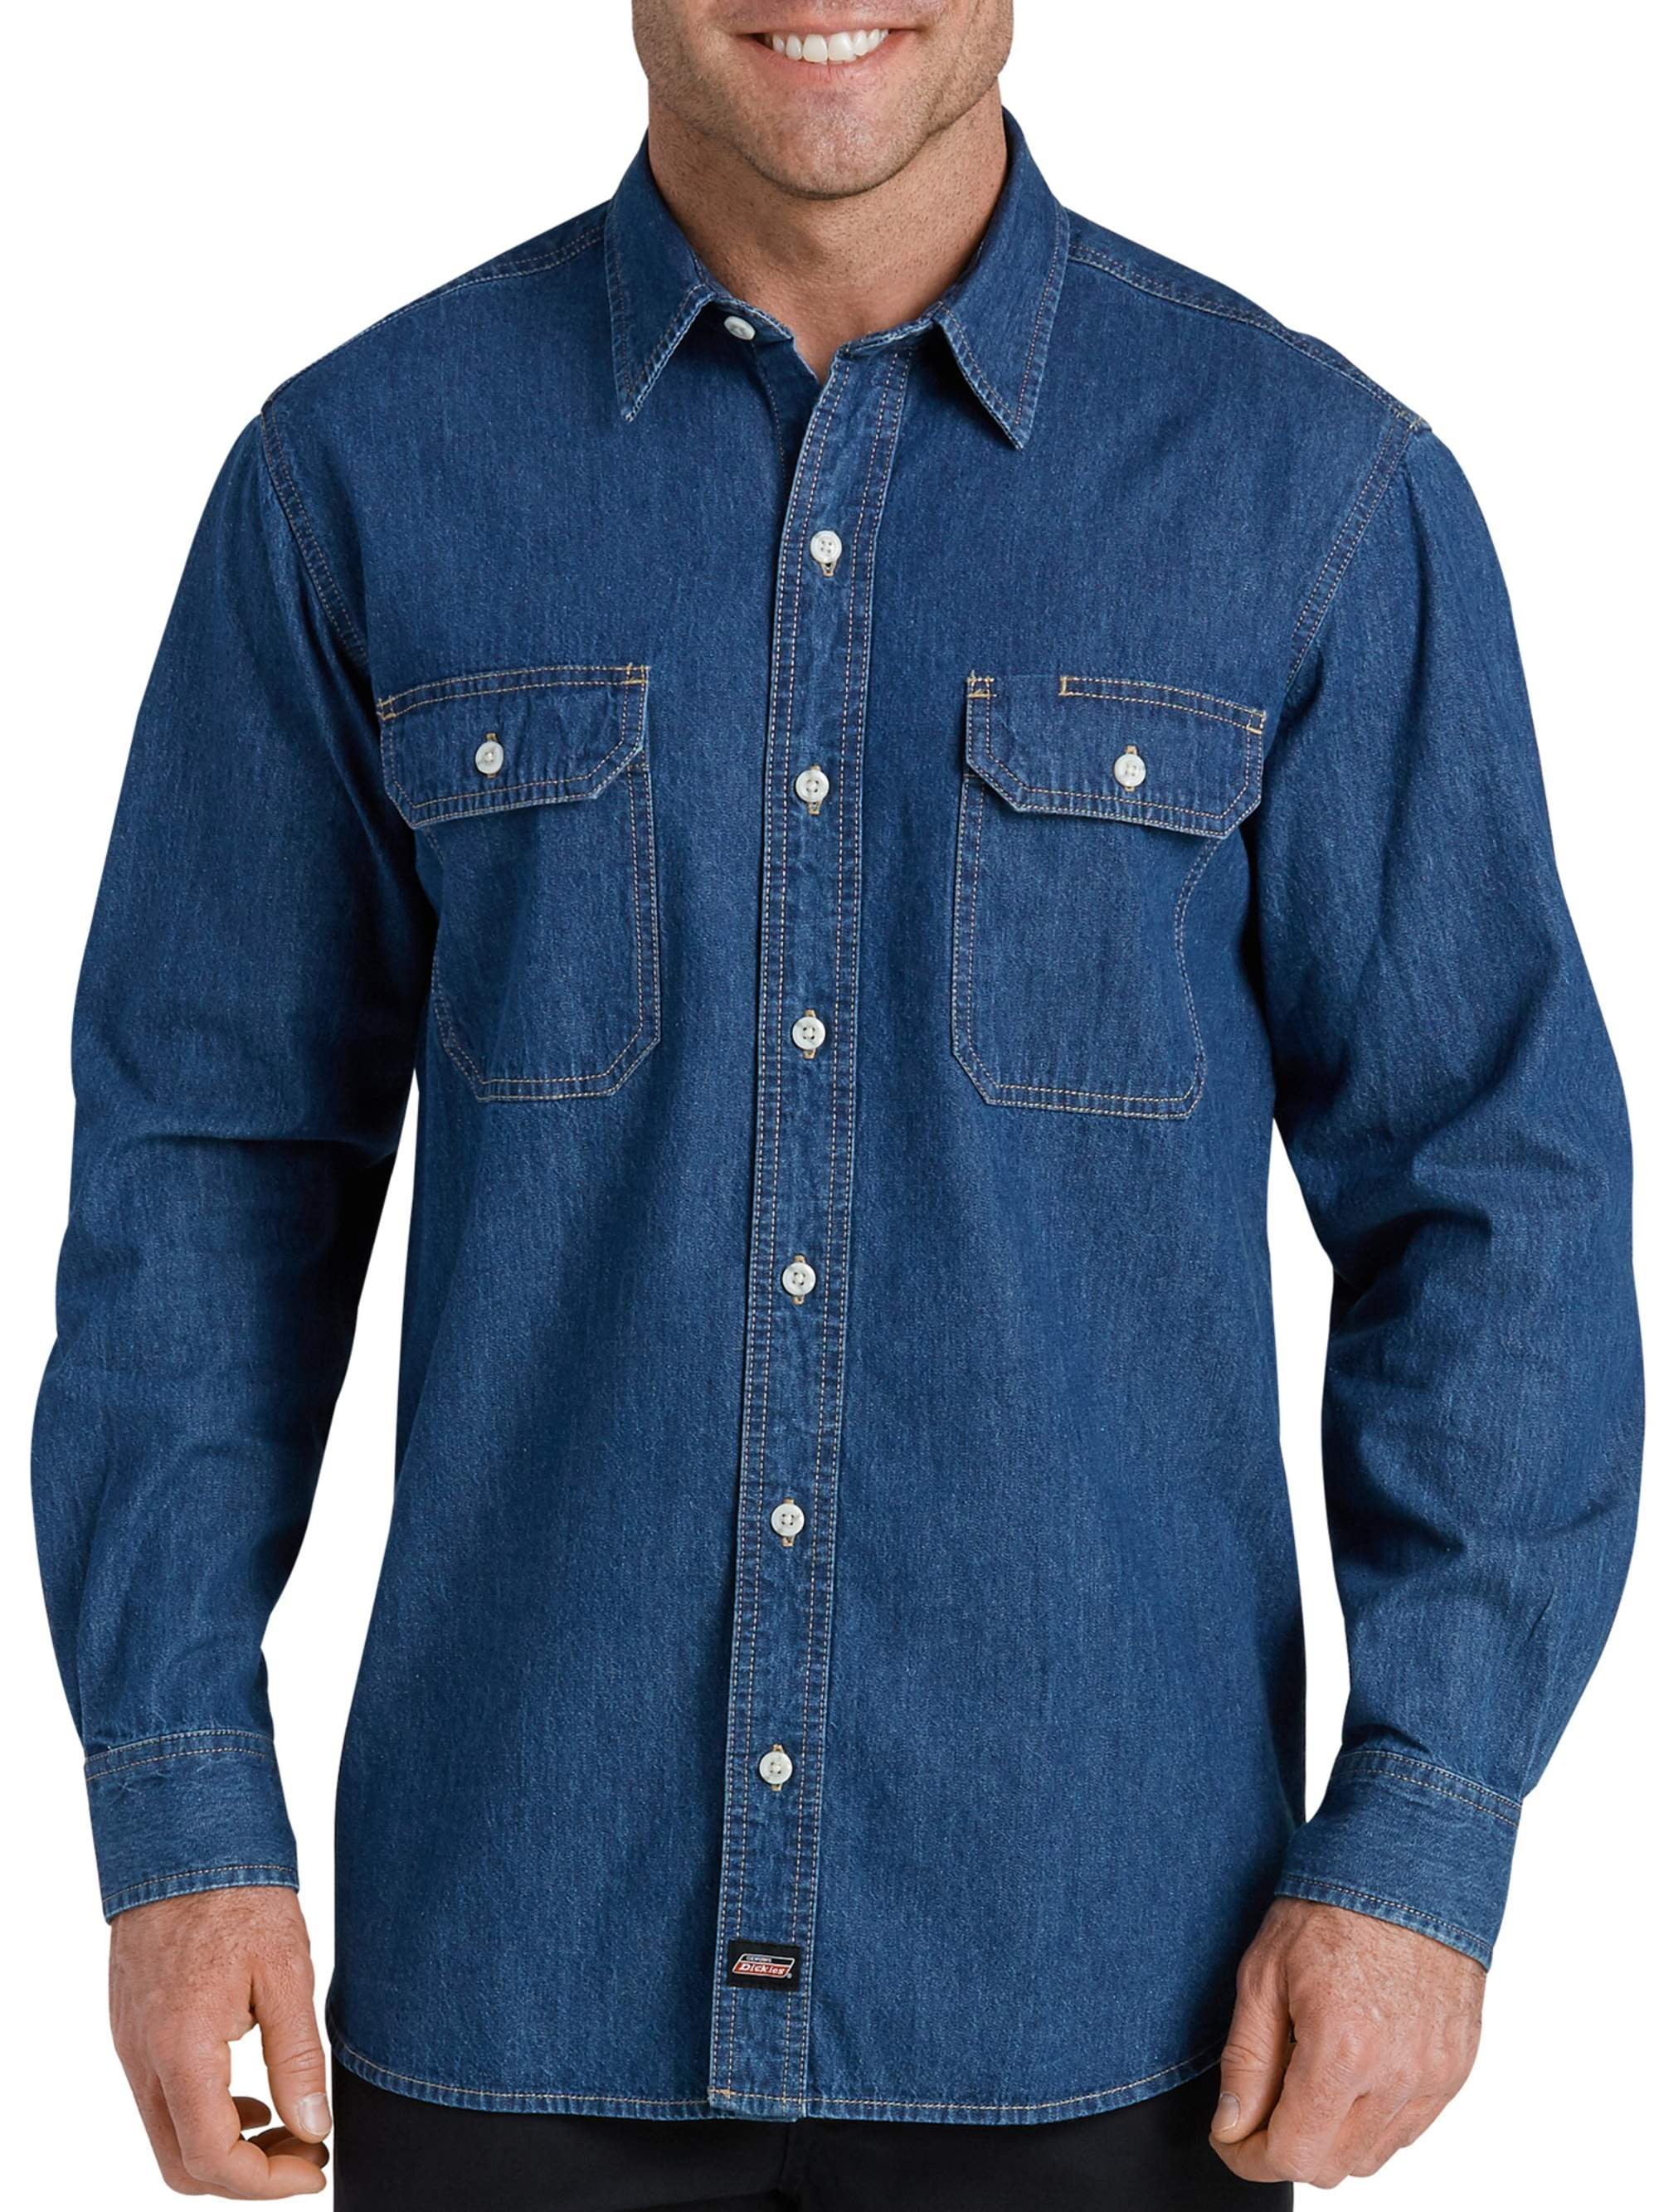 IHSH-353-BLU - 10oz Selvedge Denim Work Shirt - Indigo Overdyed Blue | Work  shirts, Selvedge denim, Japanese selvedge denim